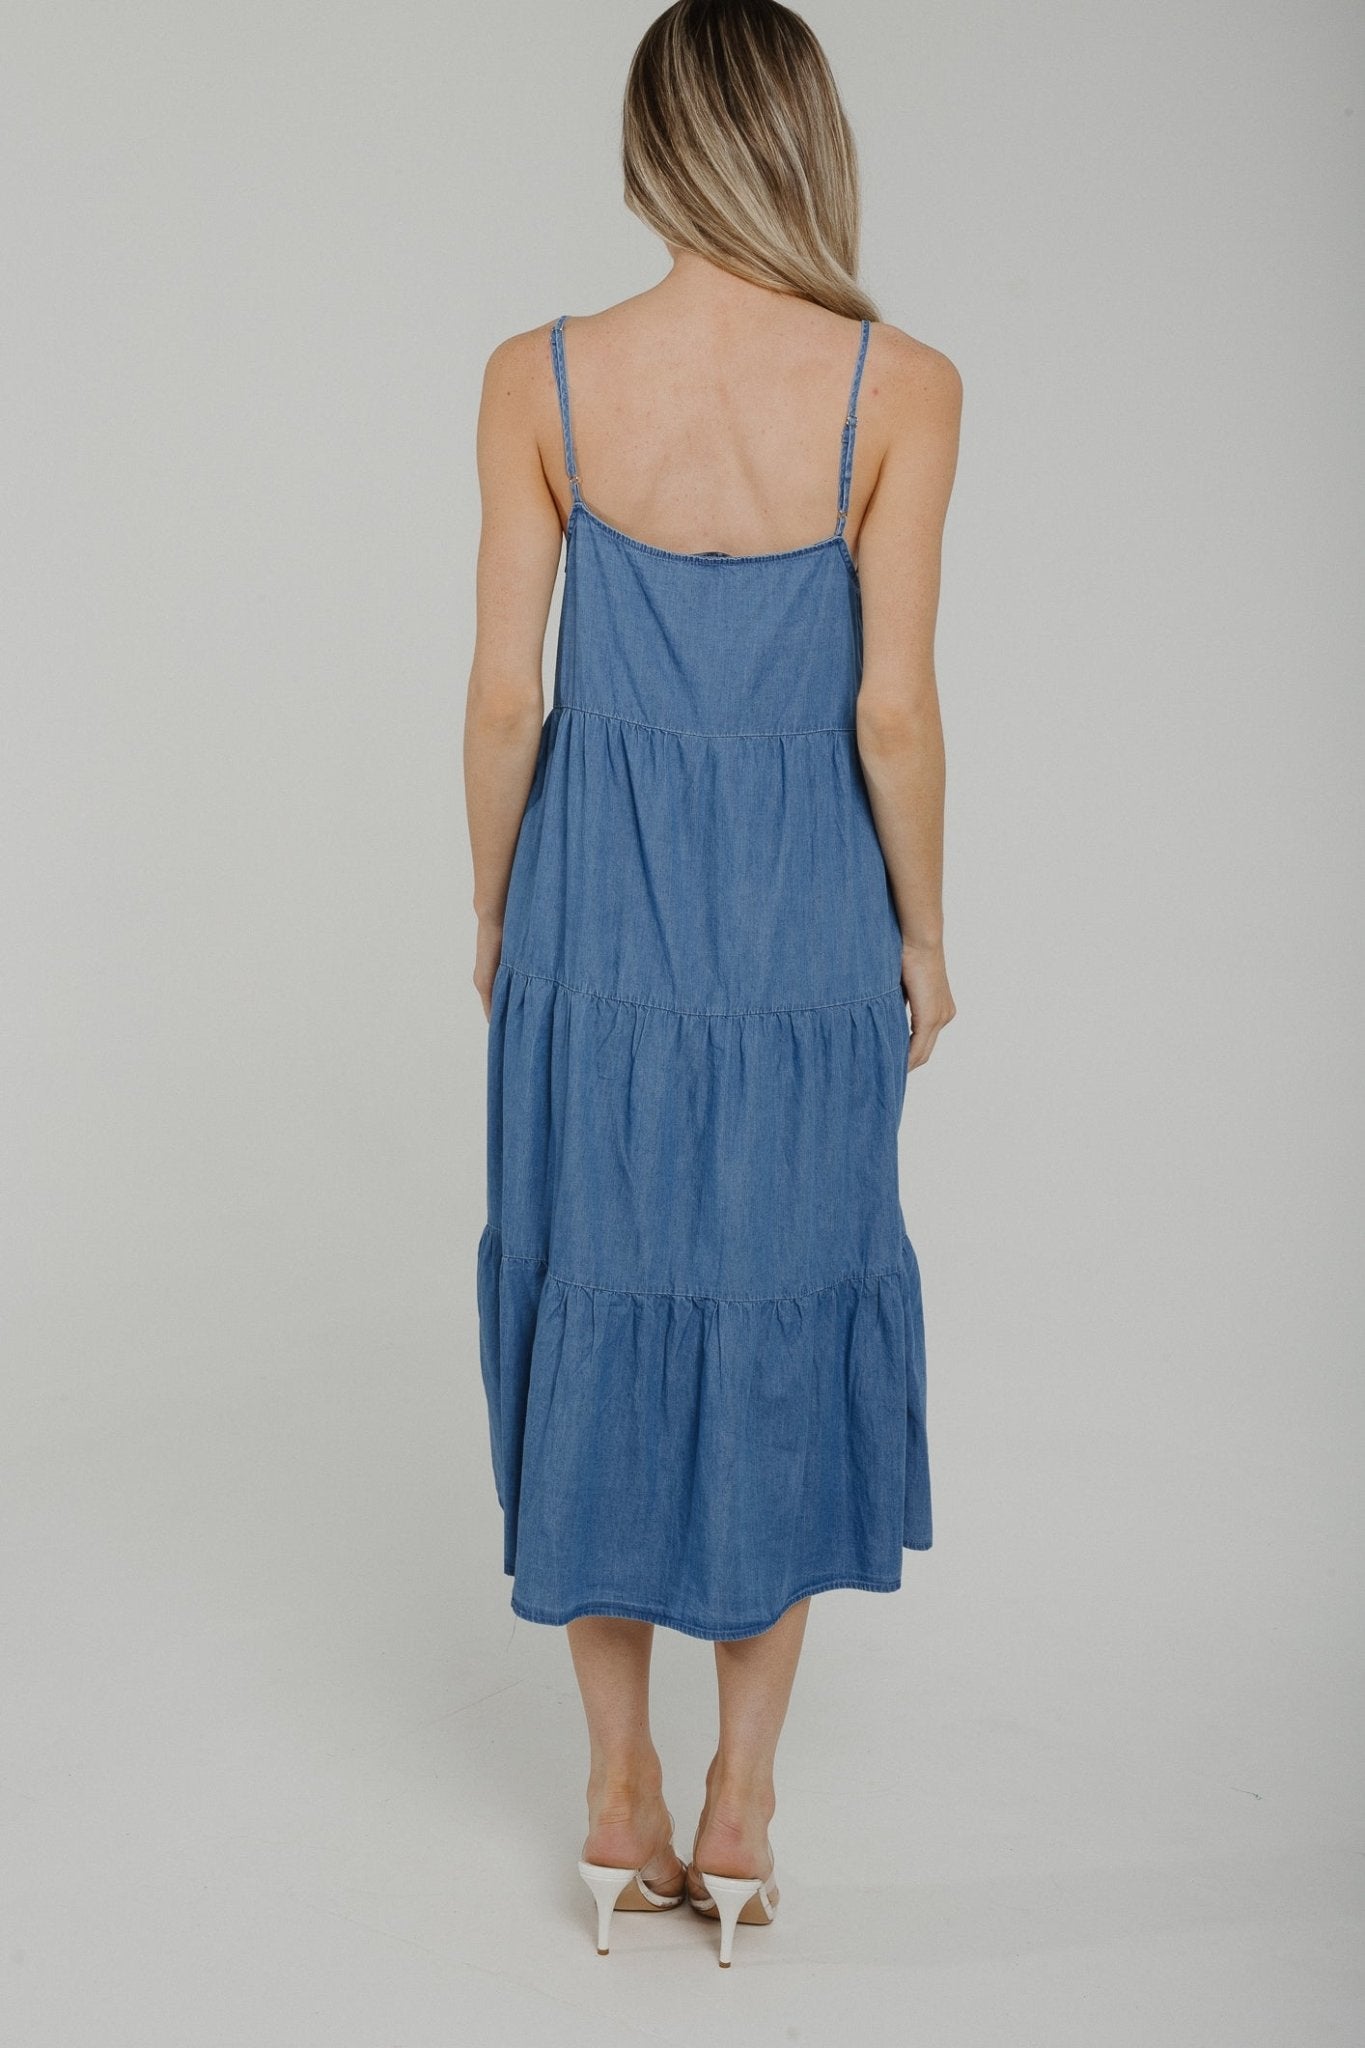 Polly Tiered Denim Dress In Mid Wash - The Walk in Wardrobe